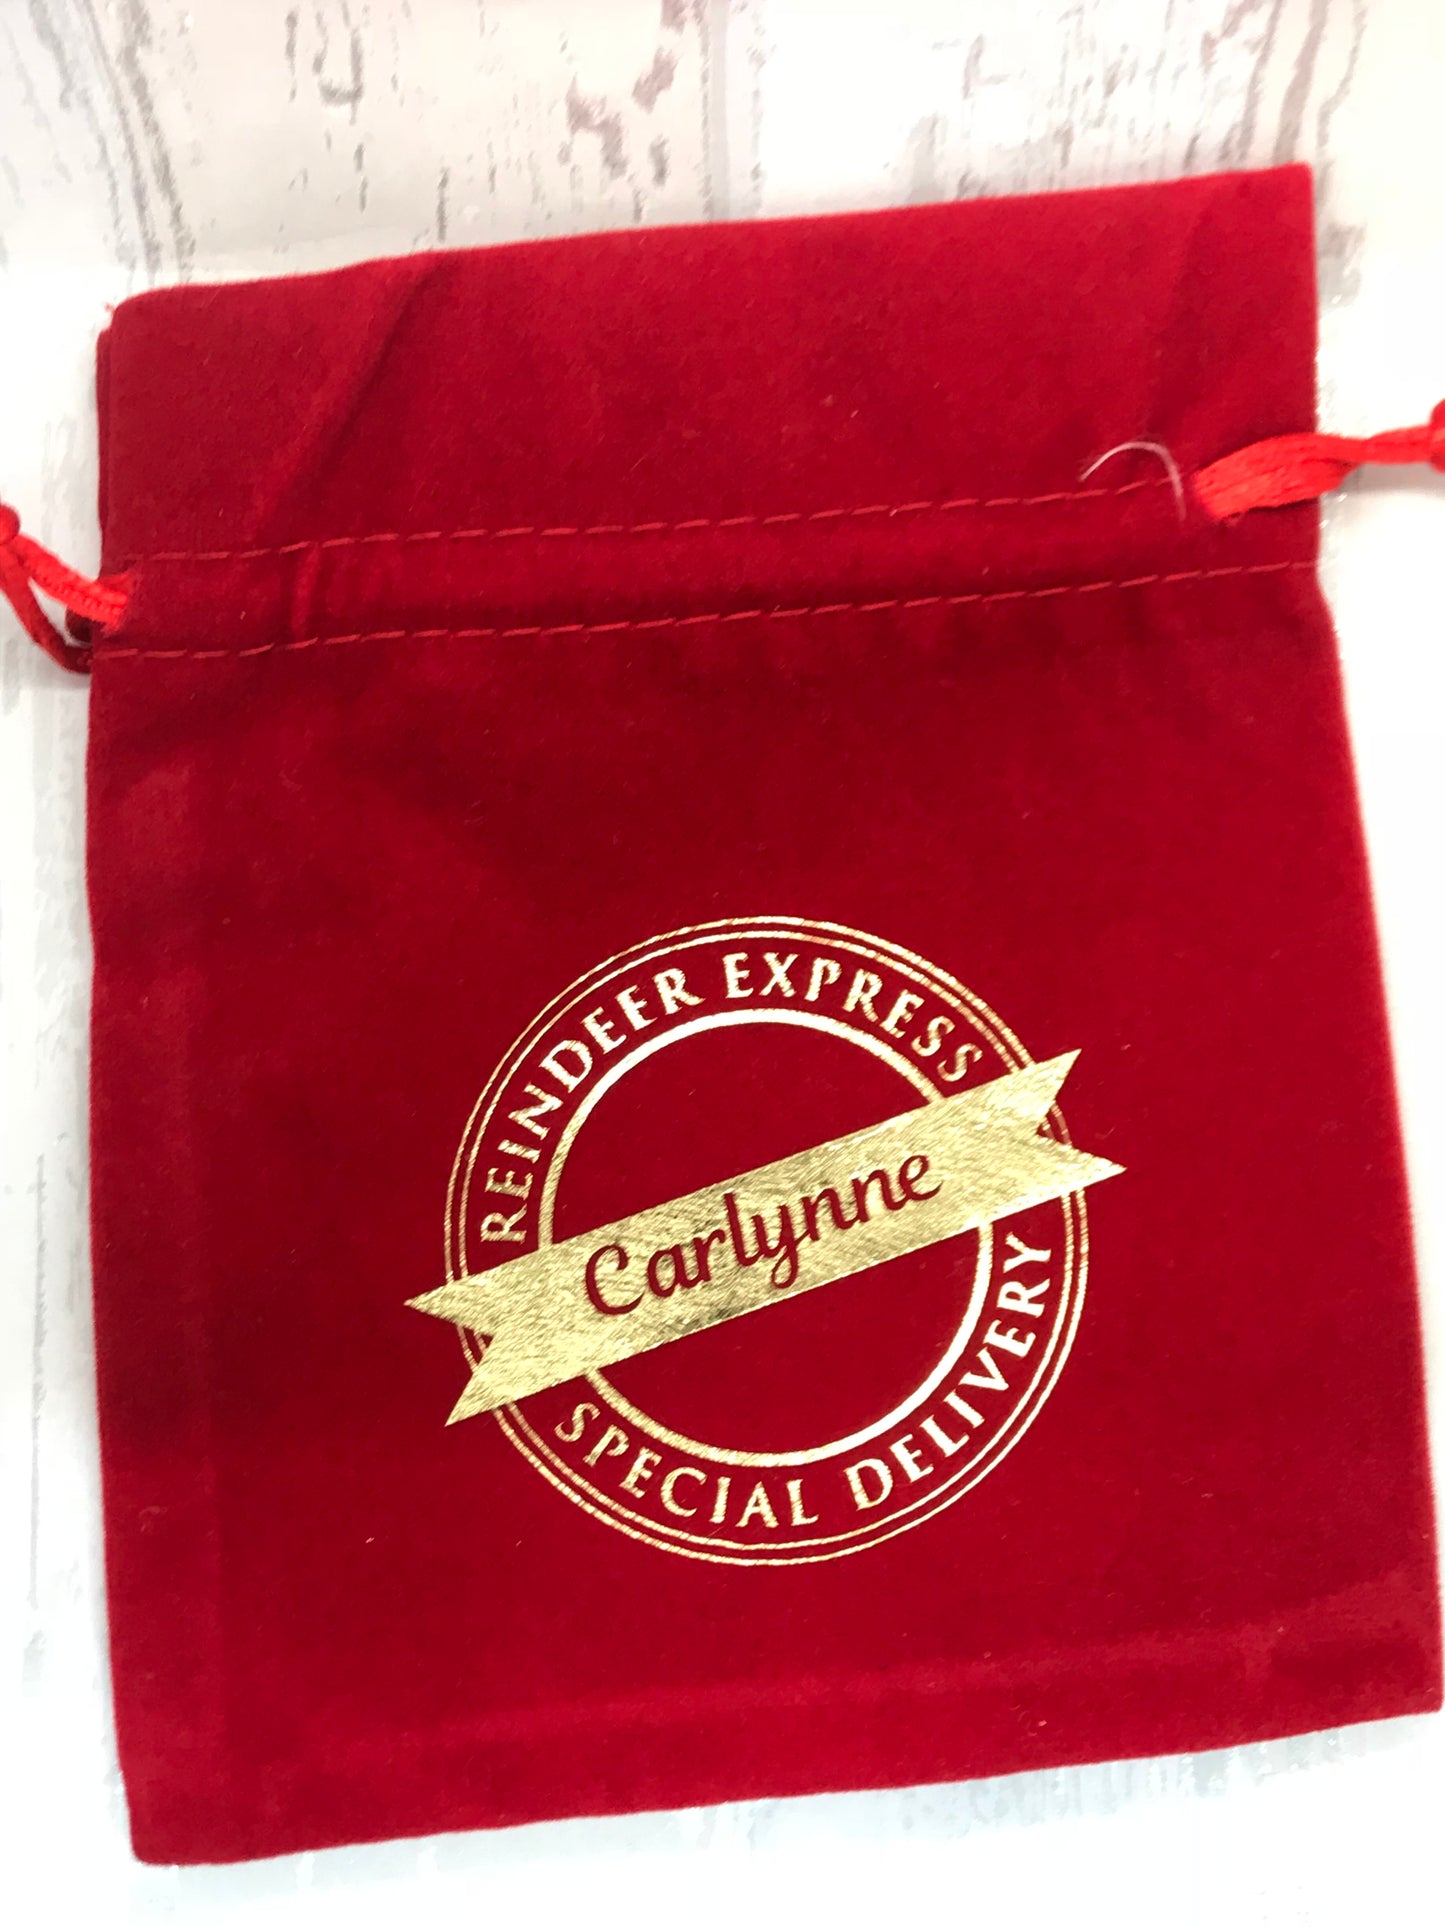 Personalised Reindeer Express Gift Bag - Flutterbye Bowtique